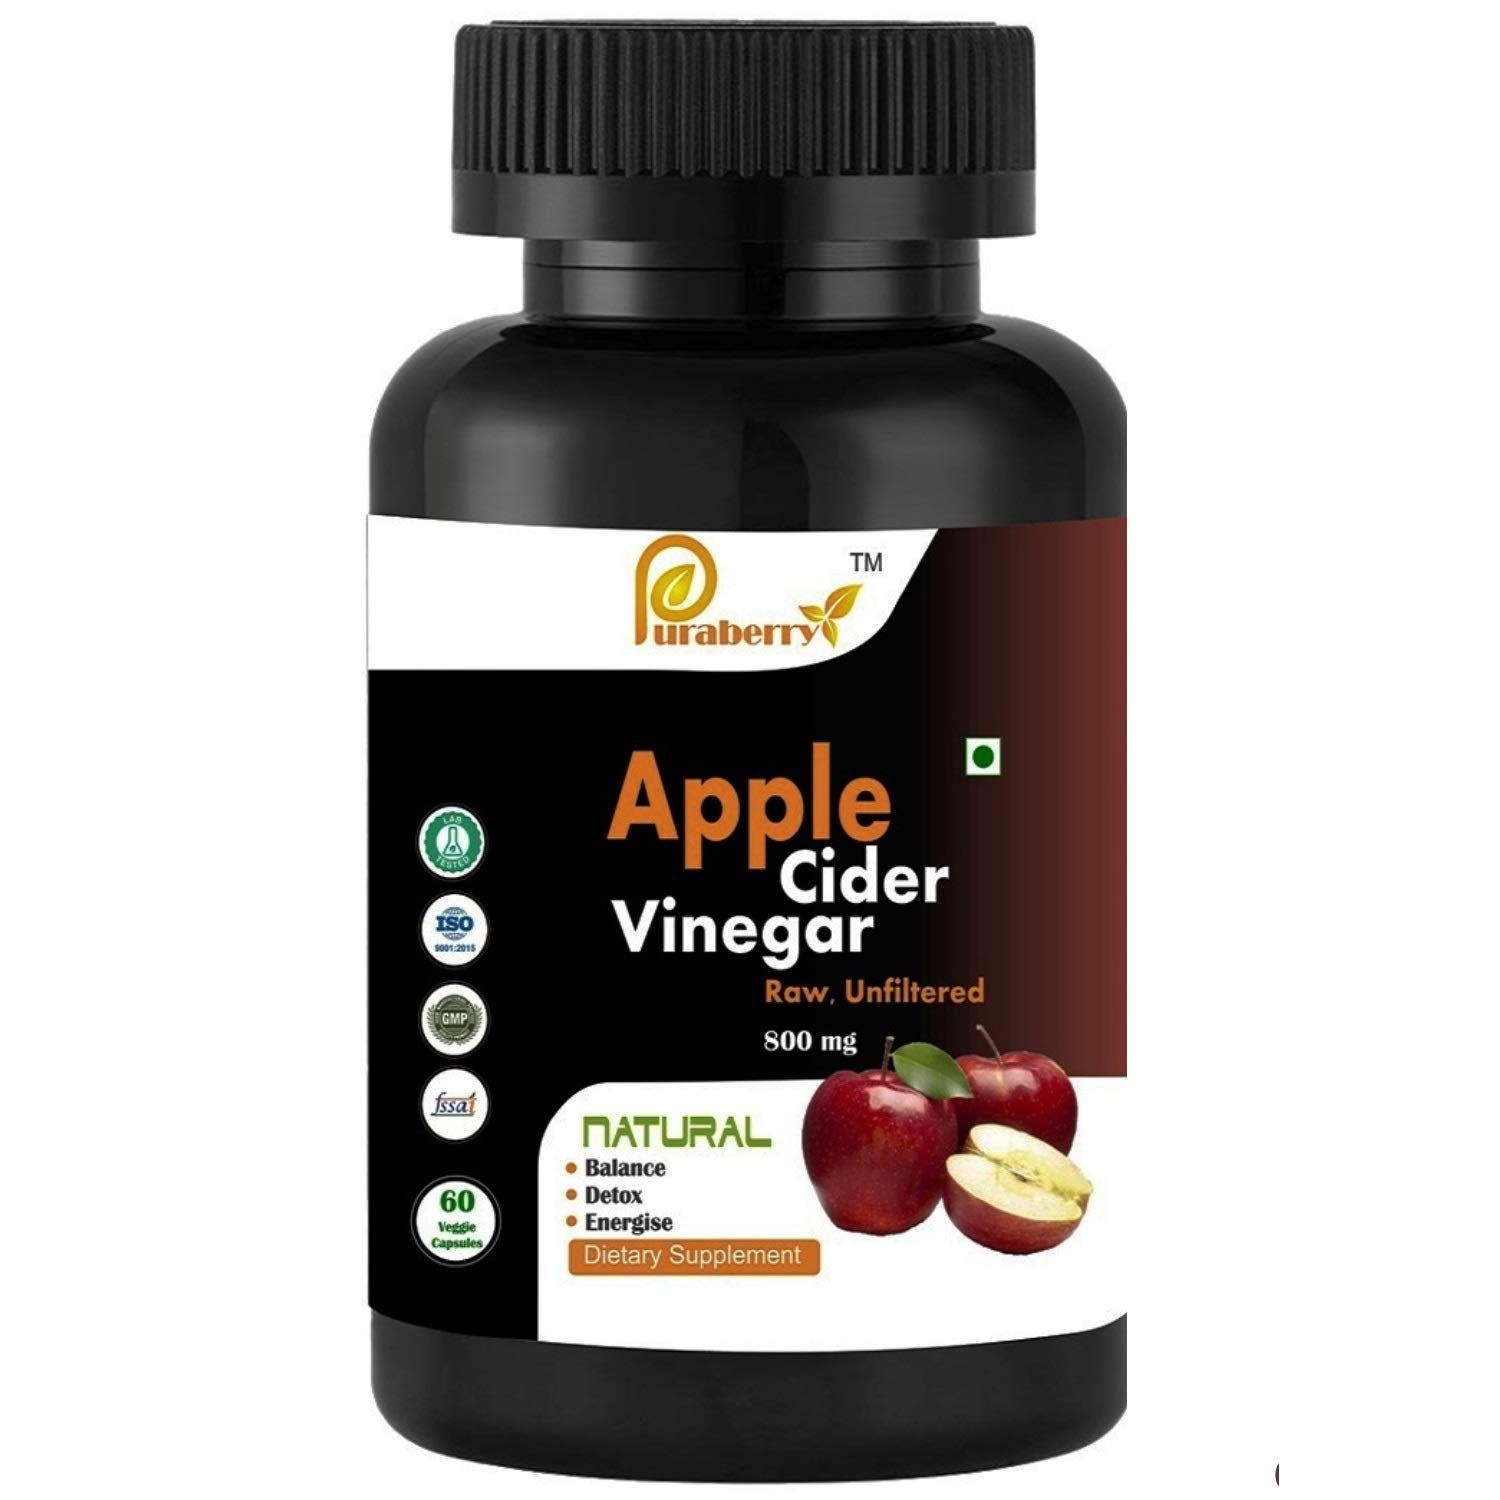 Puraberry Apple Cider Vinegat Image